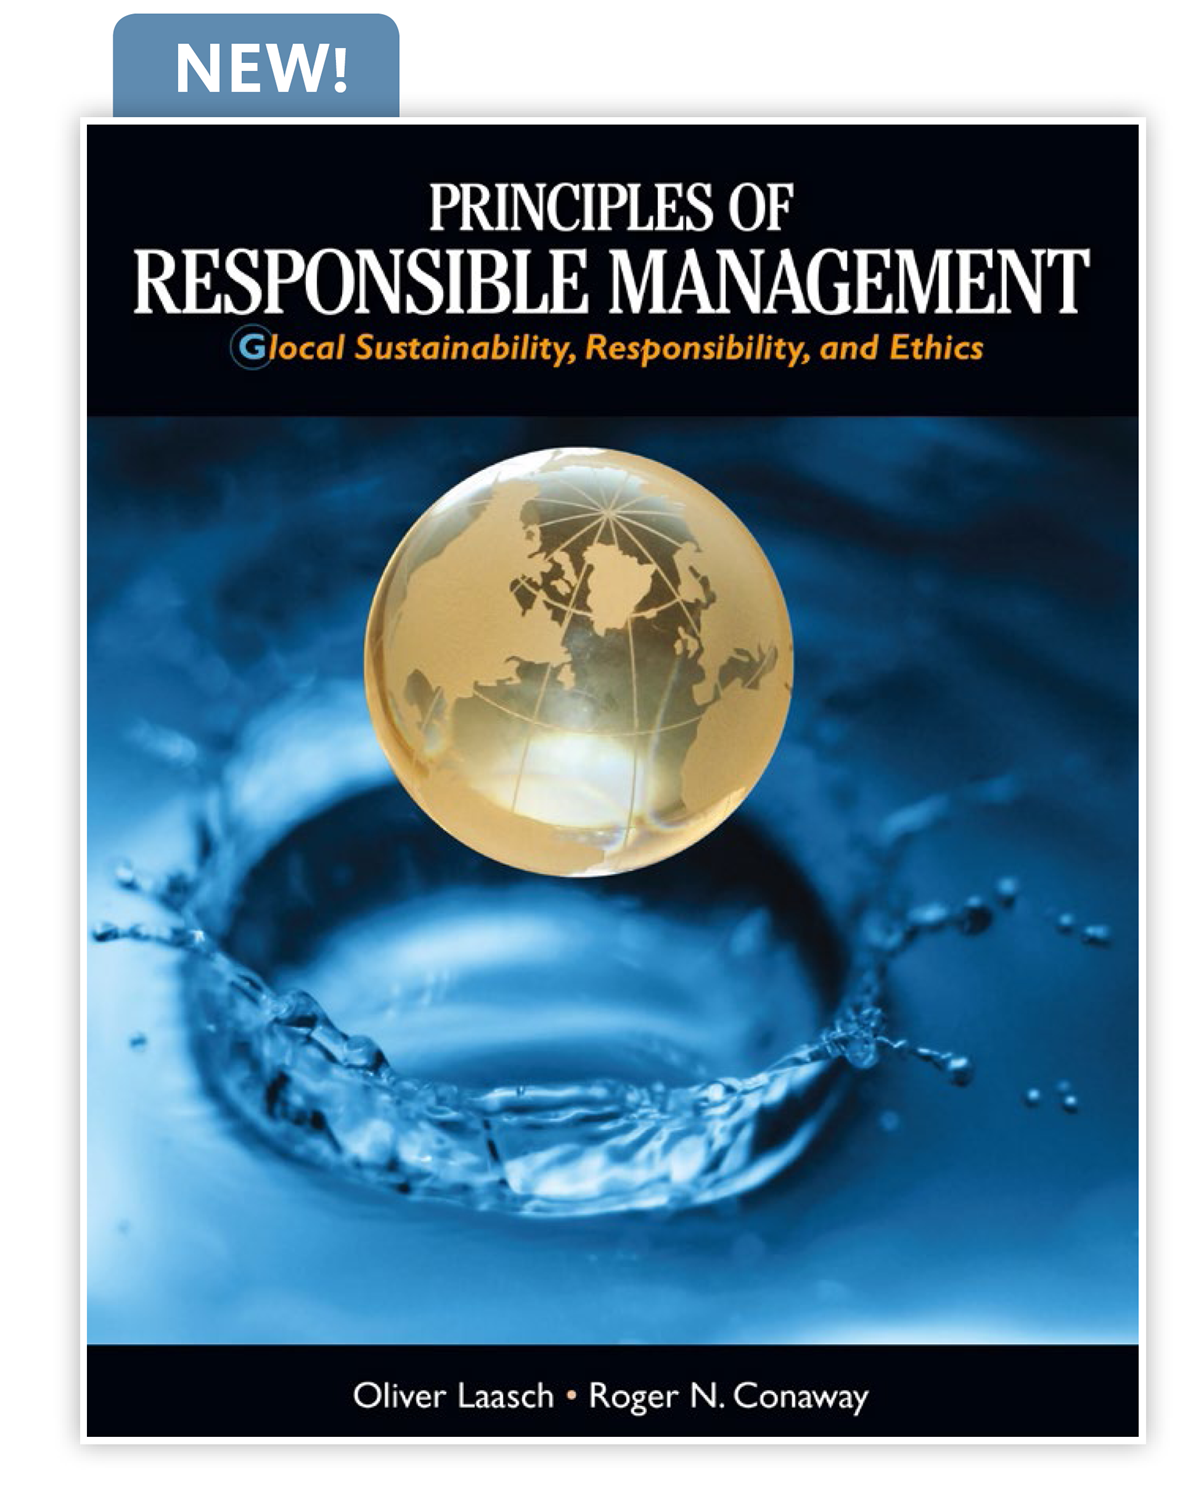 business management textbook pdf